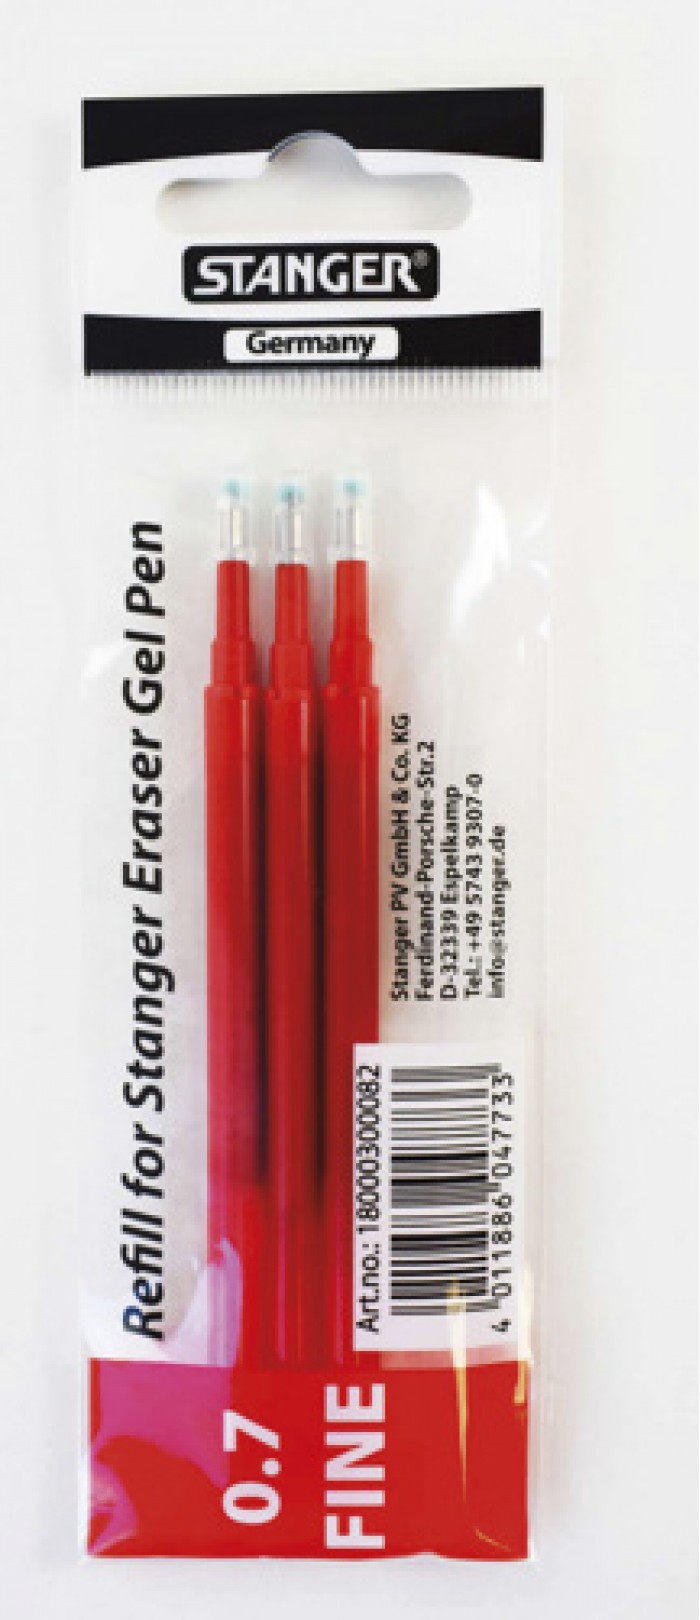 Eraser Gel pen refill 0,7 rot / red